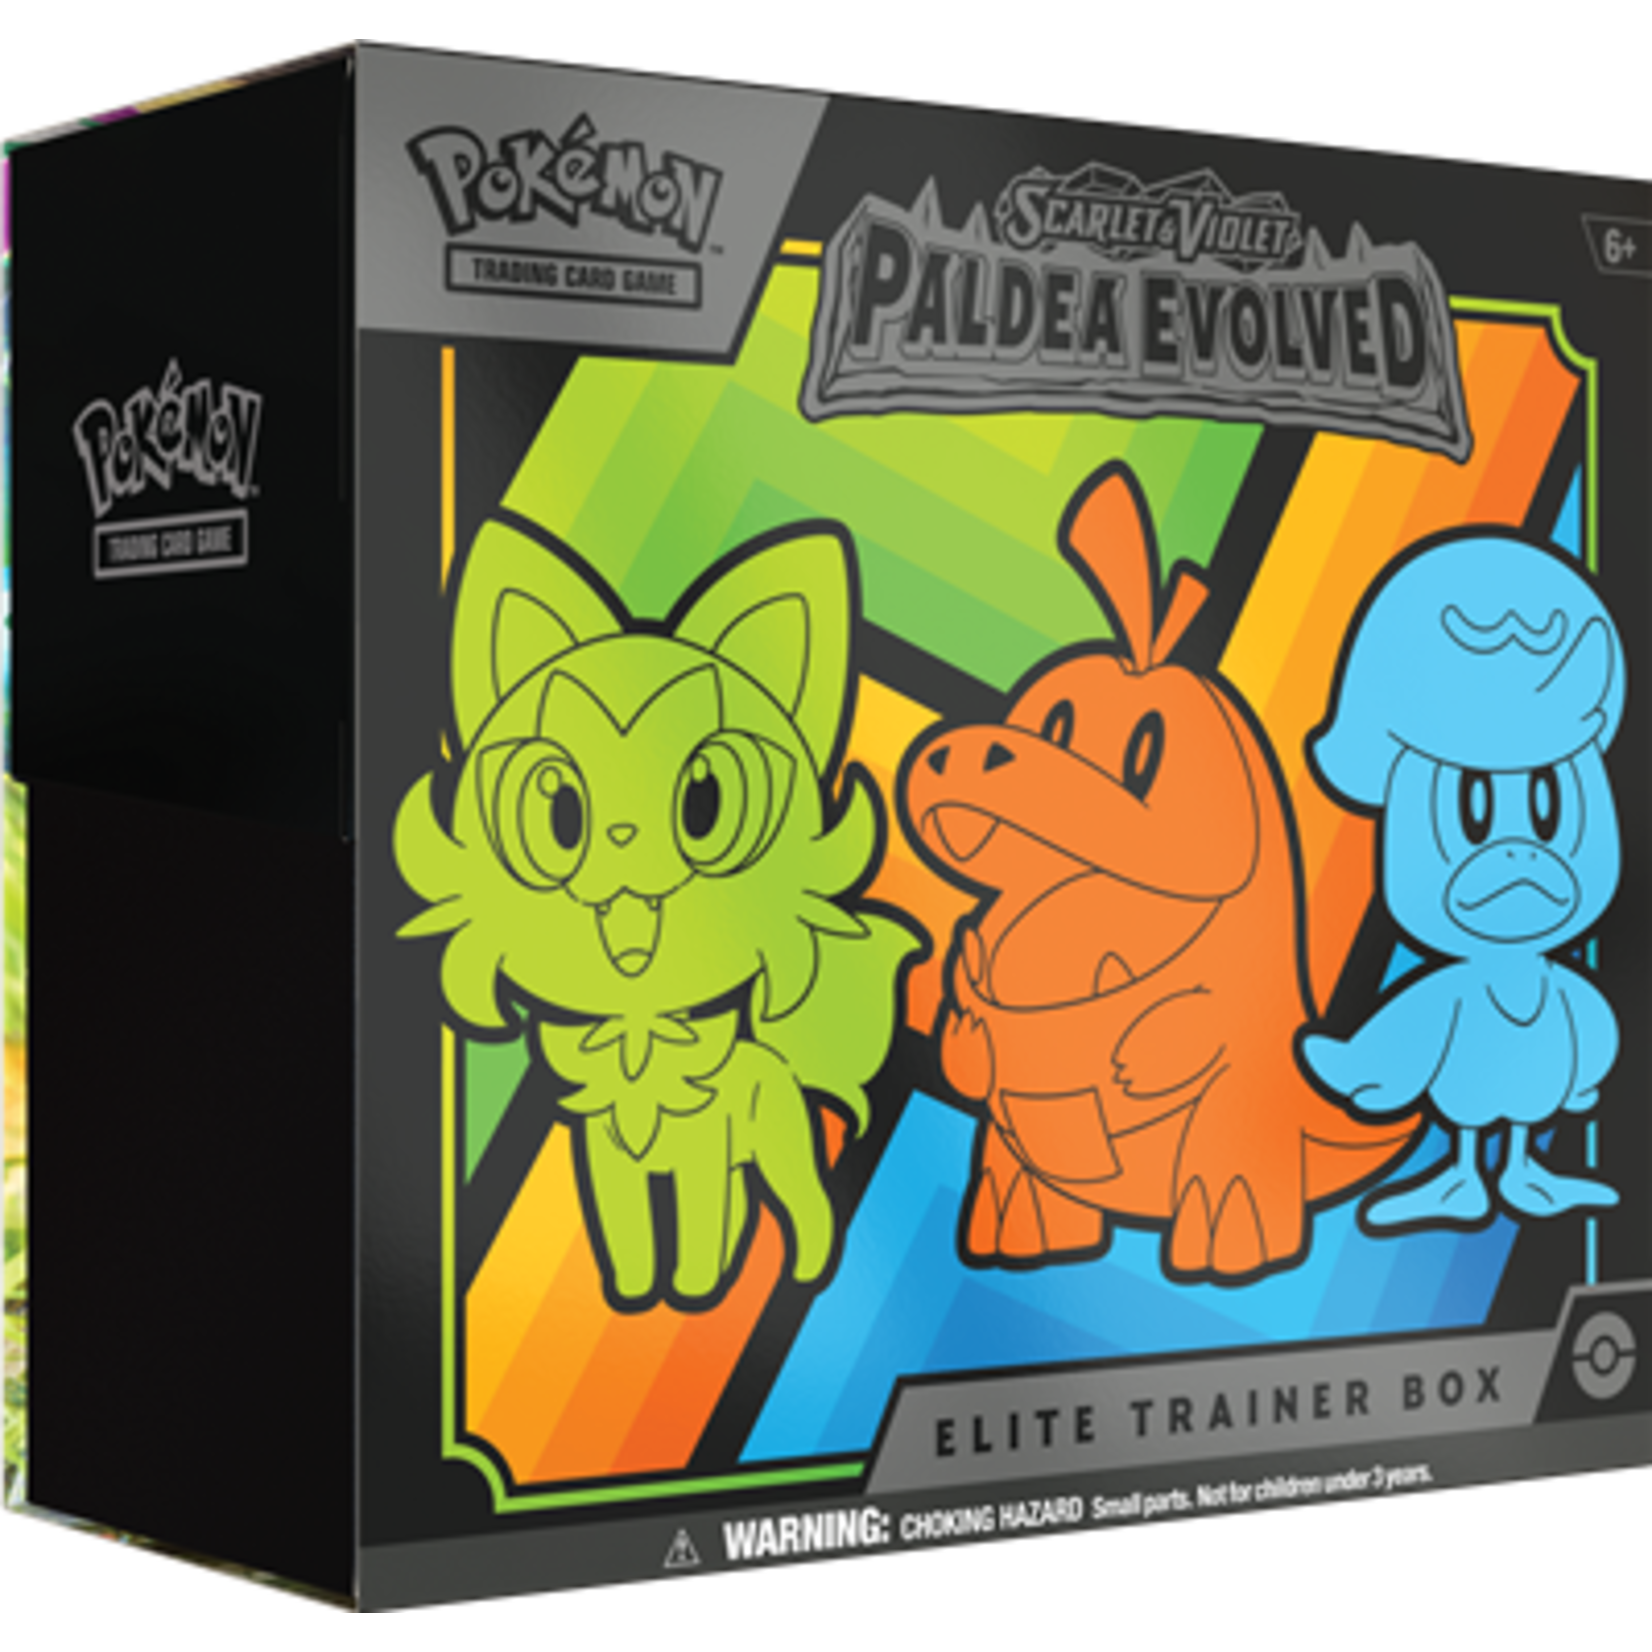 Pokémon PKM - TCG SV02 Paldea Evolved Elite Trainer Box